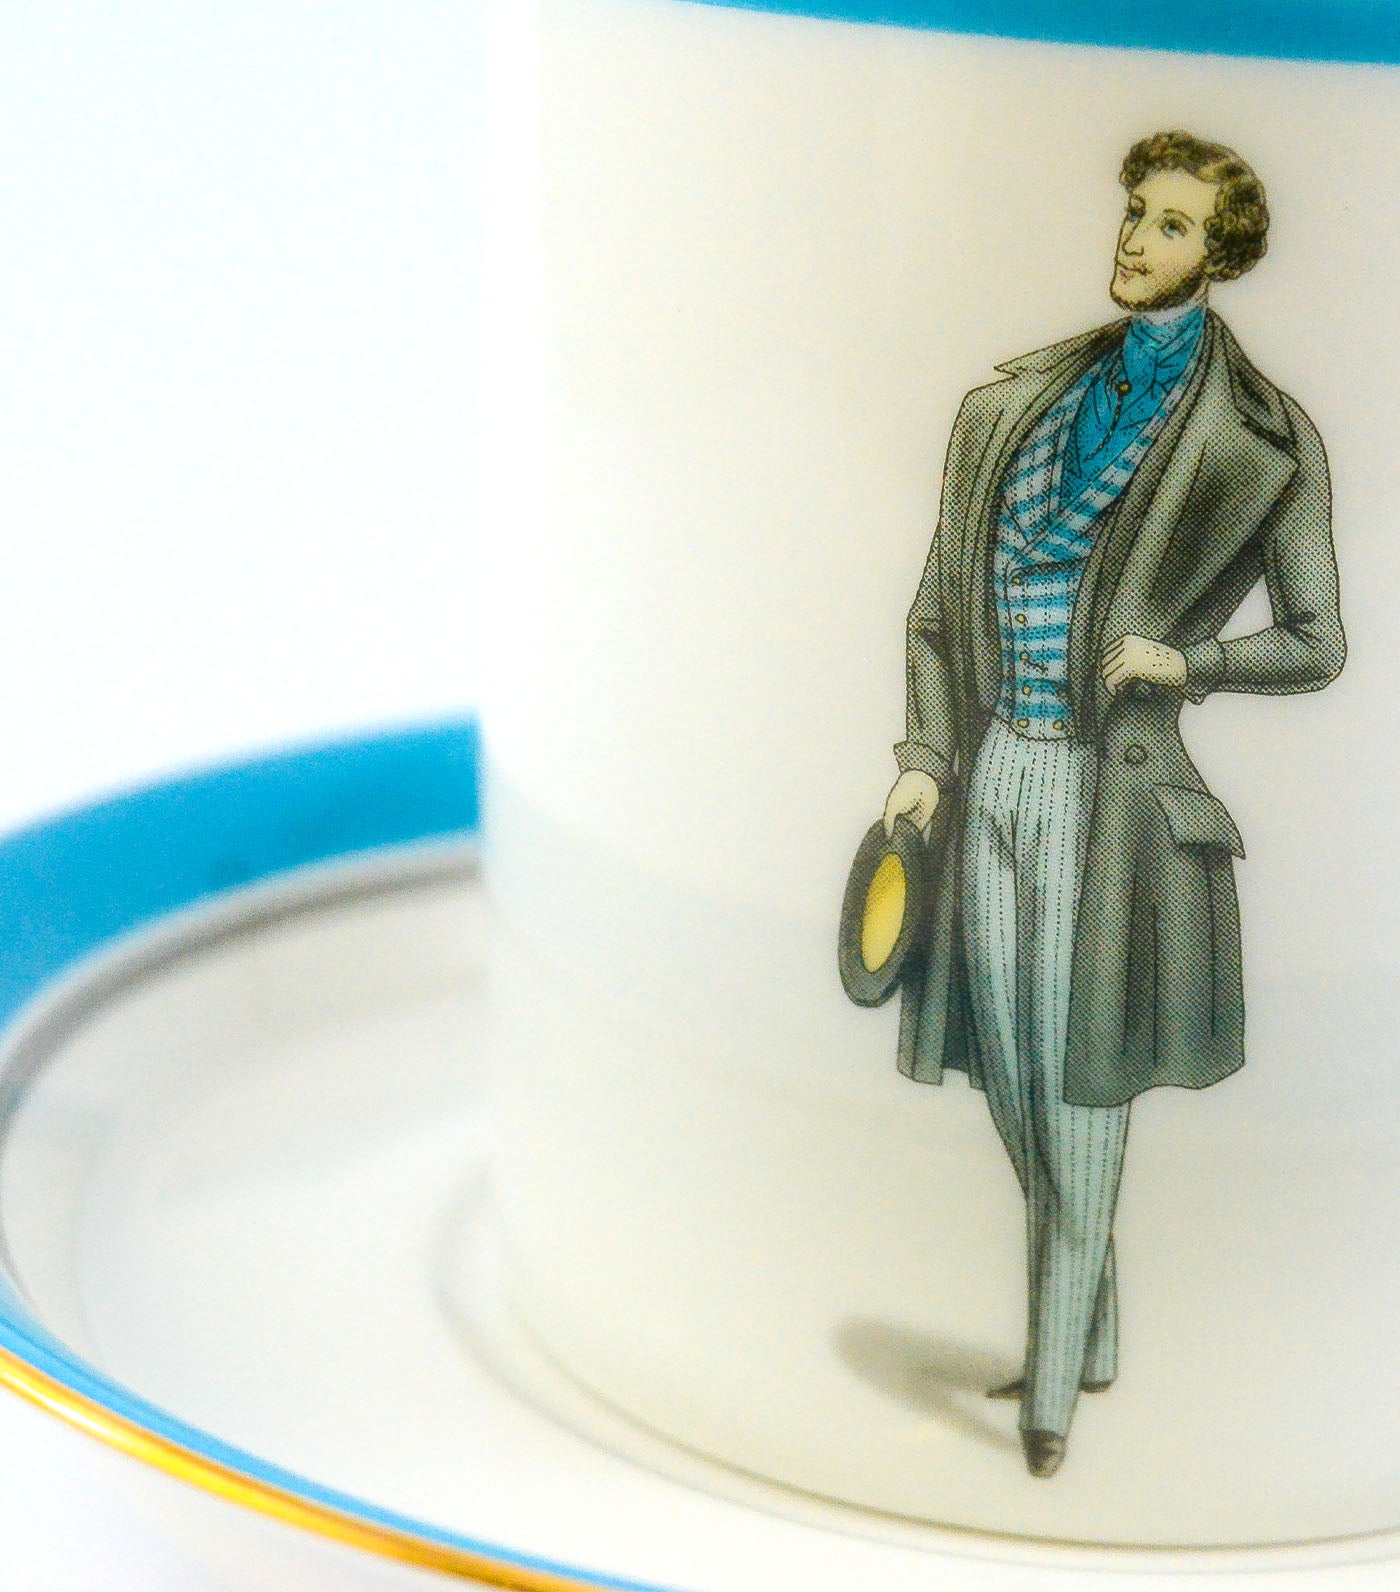 imperial porcelain modes de paris 1844 teacup and saucer heraldic 